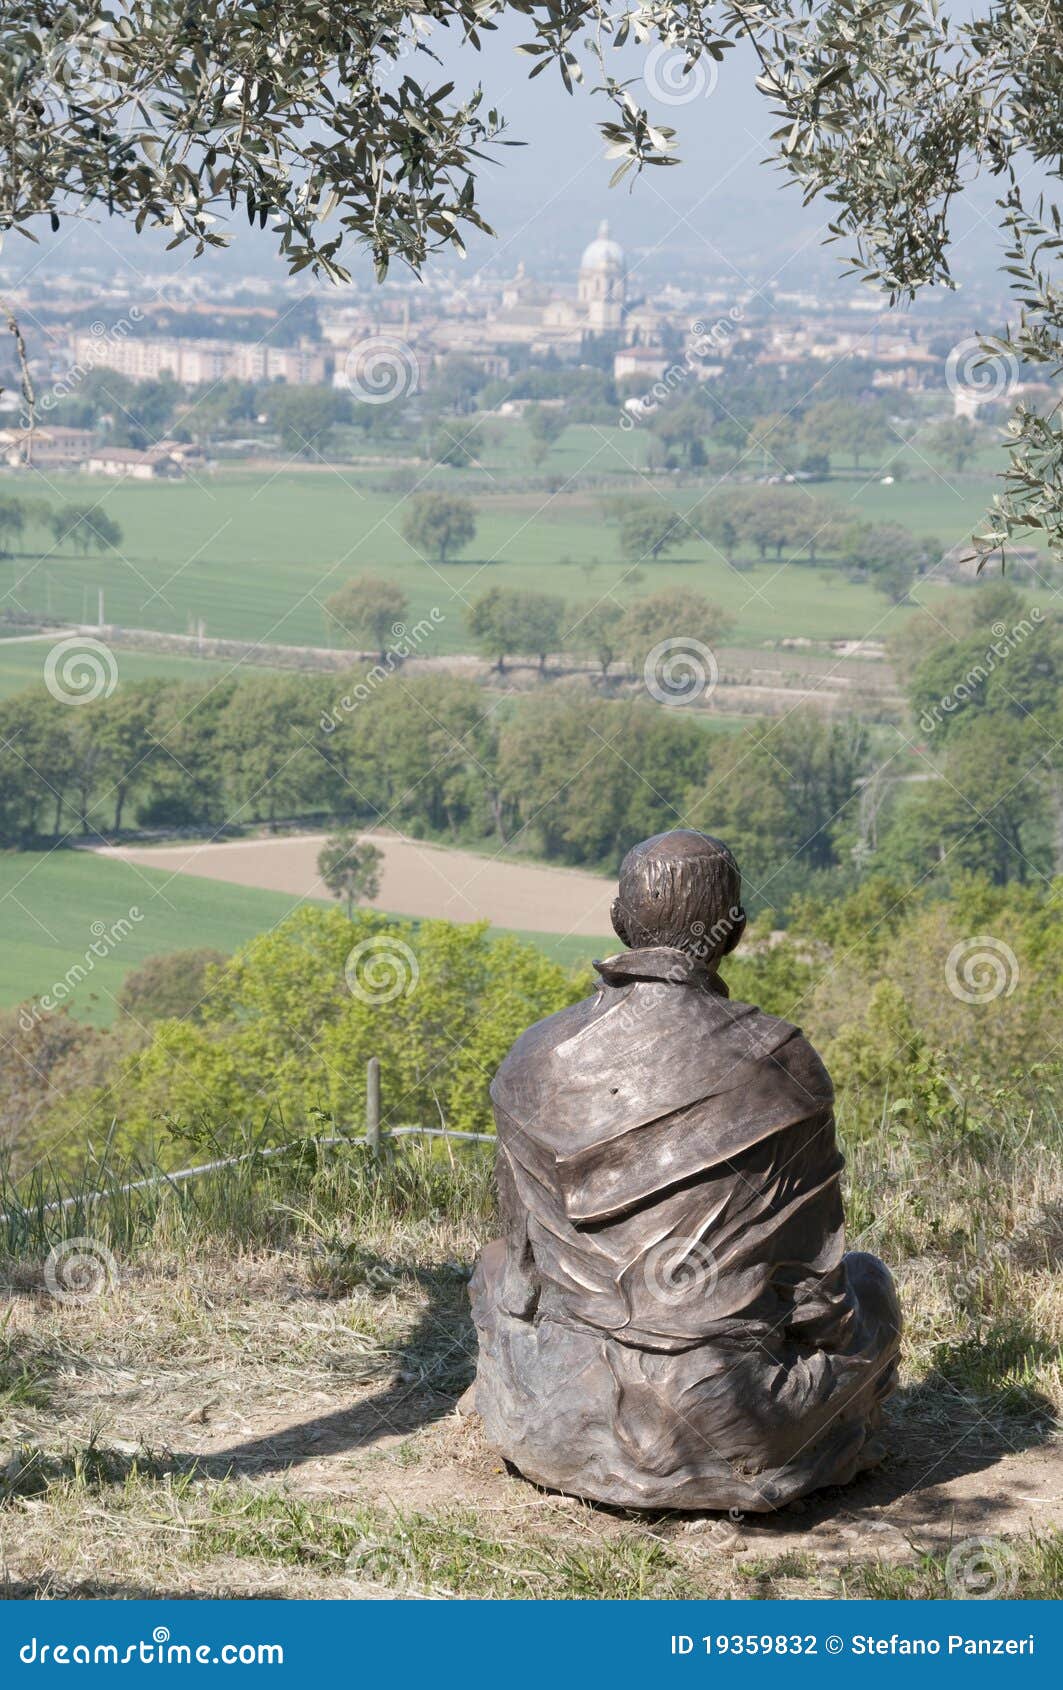 san francis' statue and landscape